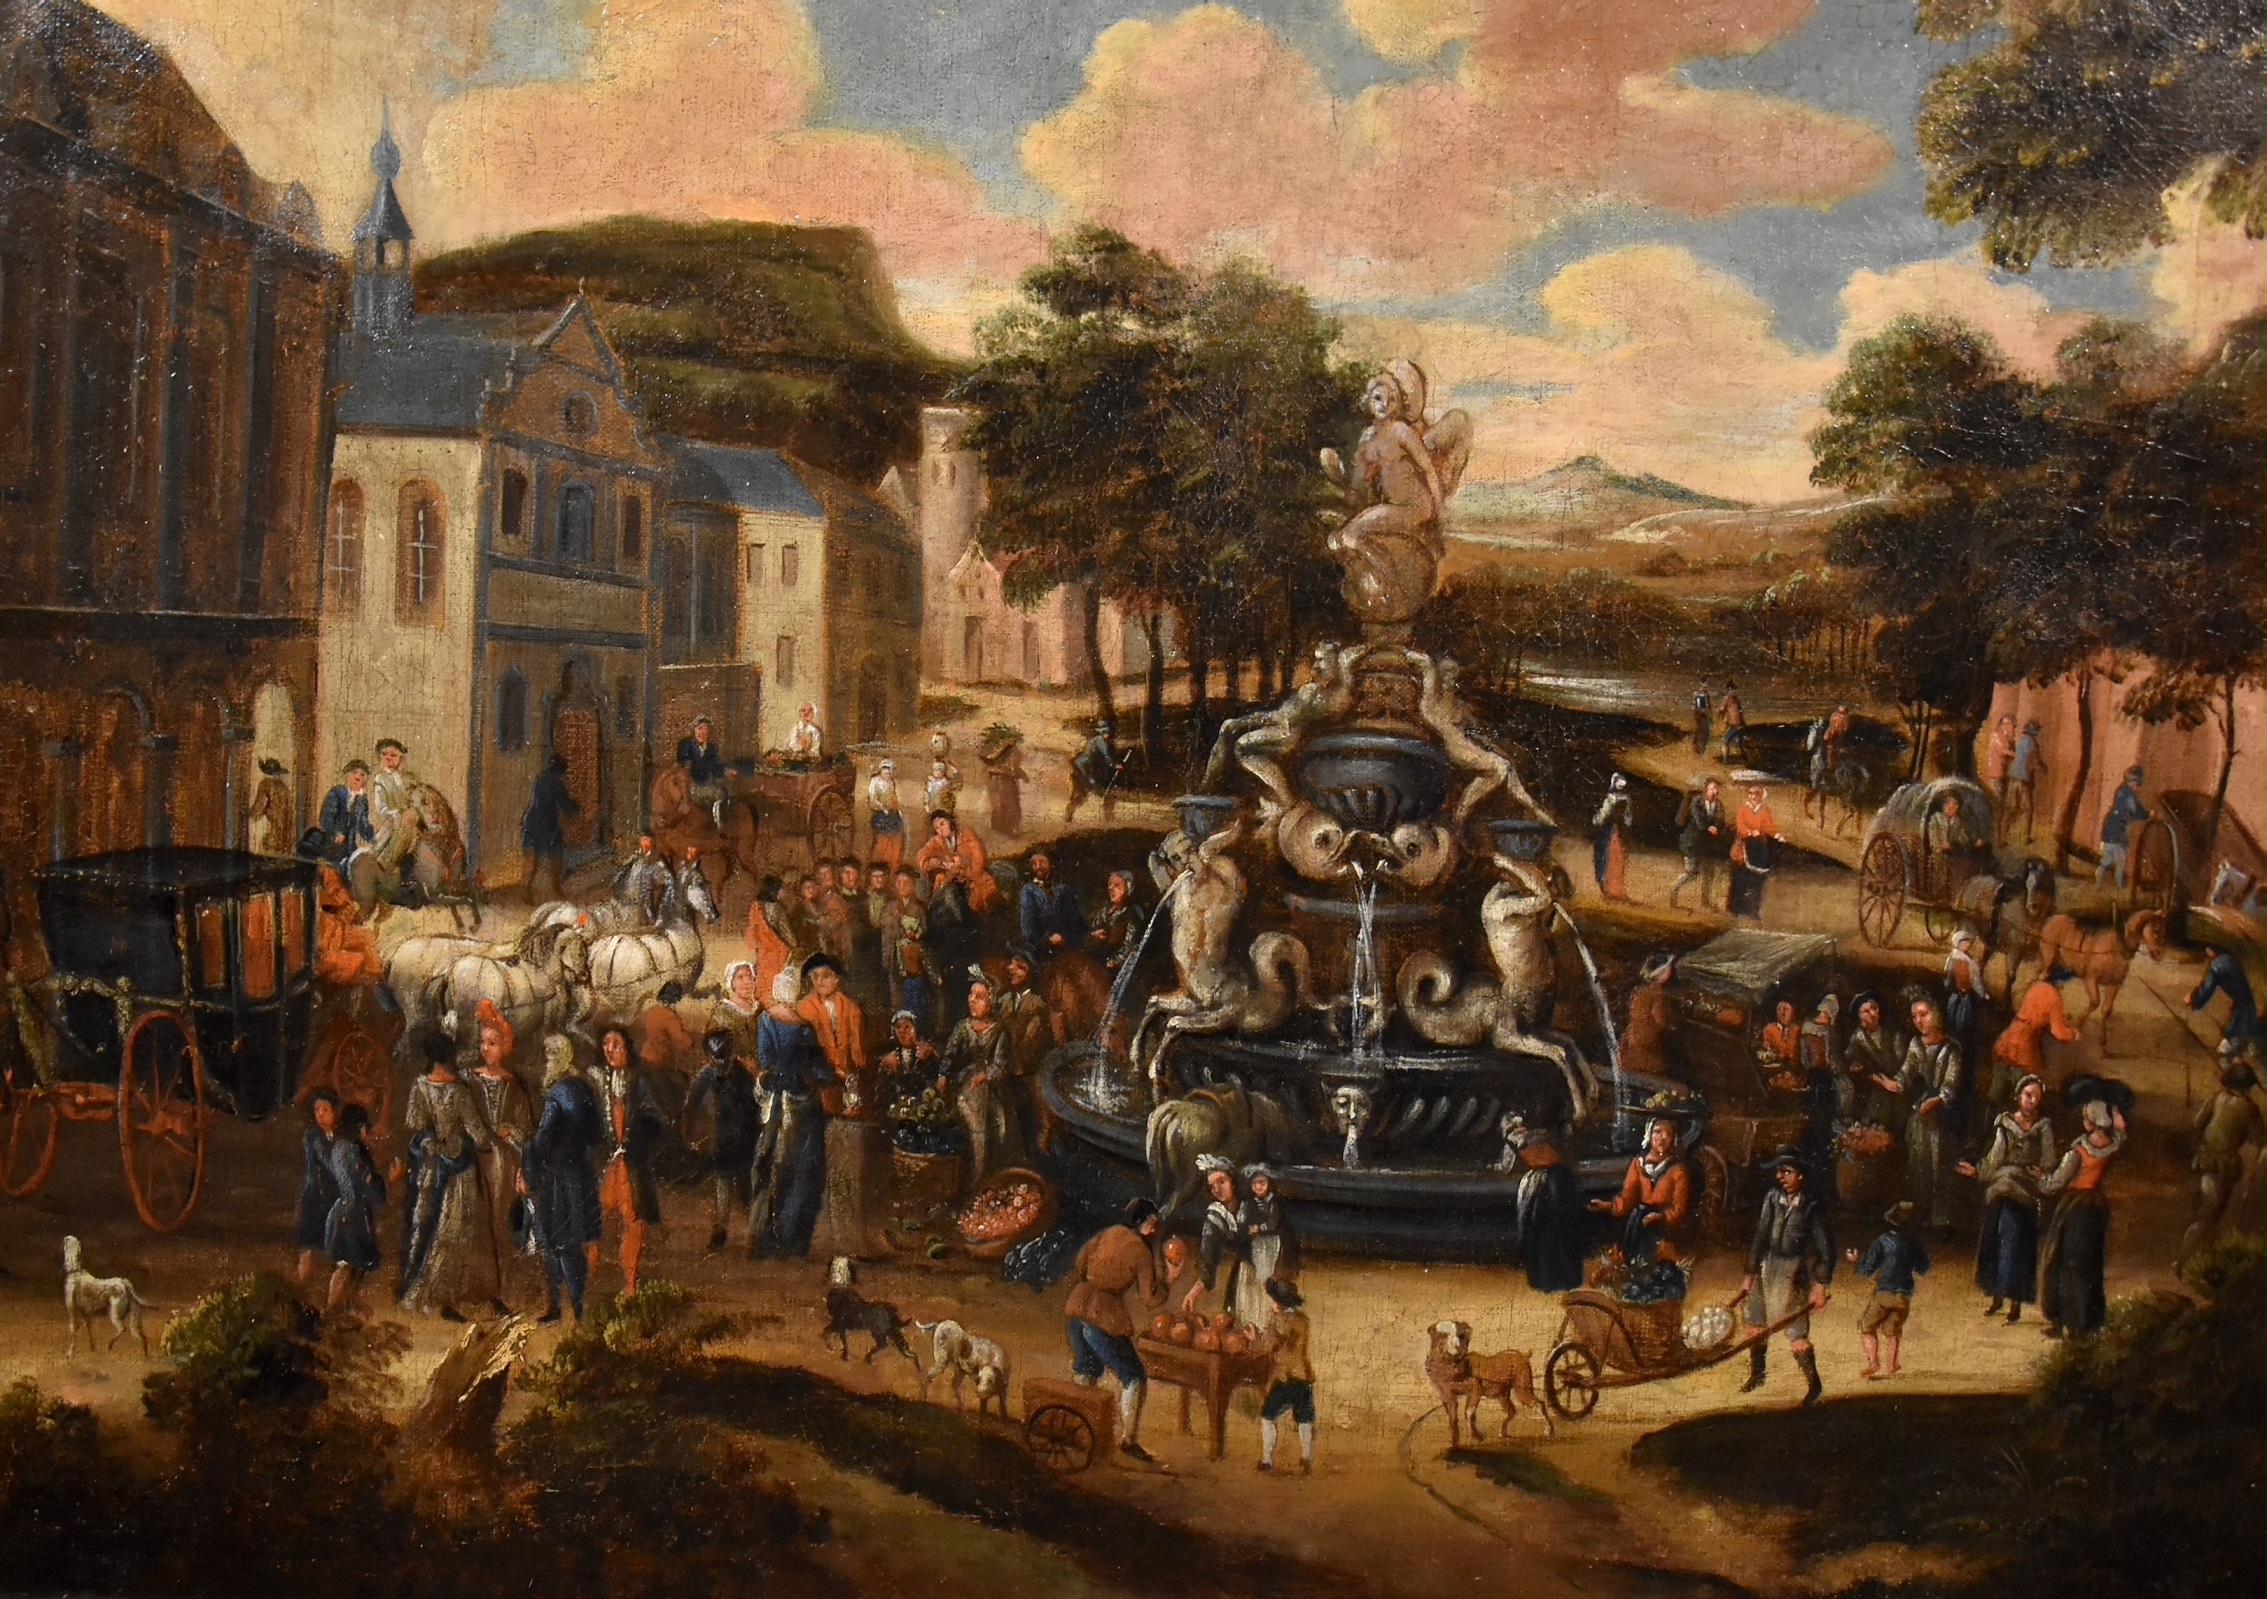 Landscape Village Market Paint Oil on canvas Old master 18th Century Flemish Art - Painting by Circle of Pieter van Bredael (Antwerp 1629 - 1719)